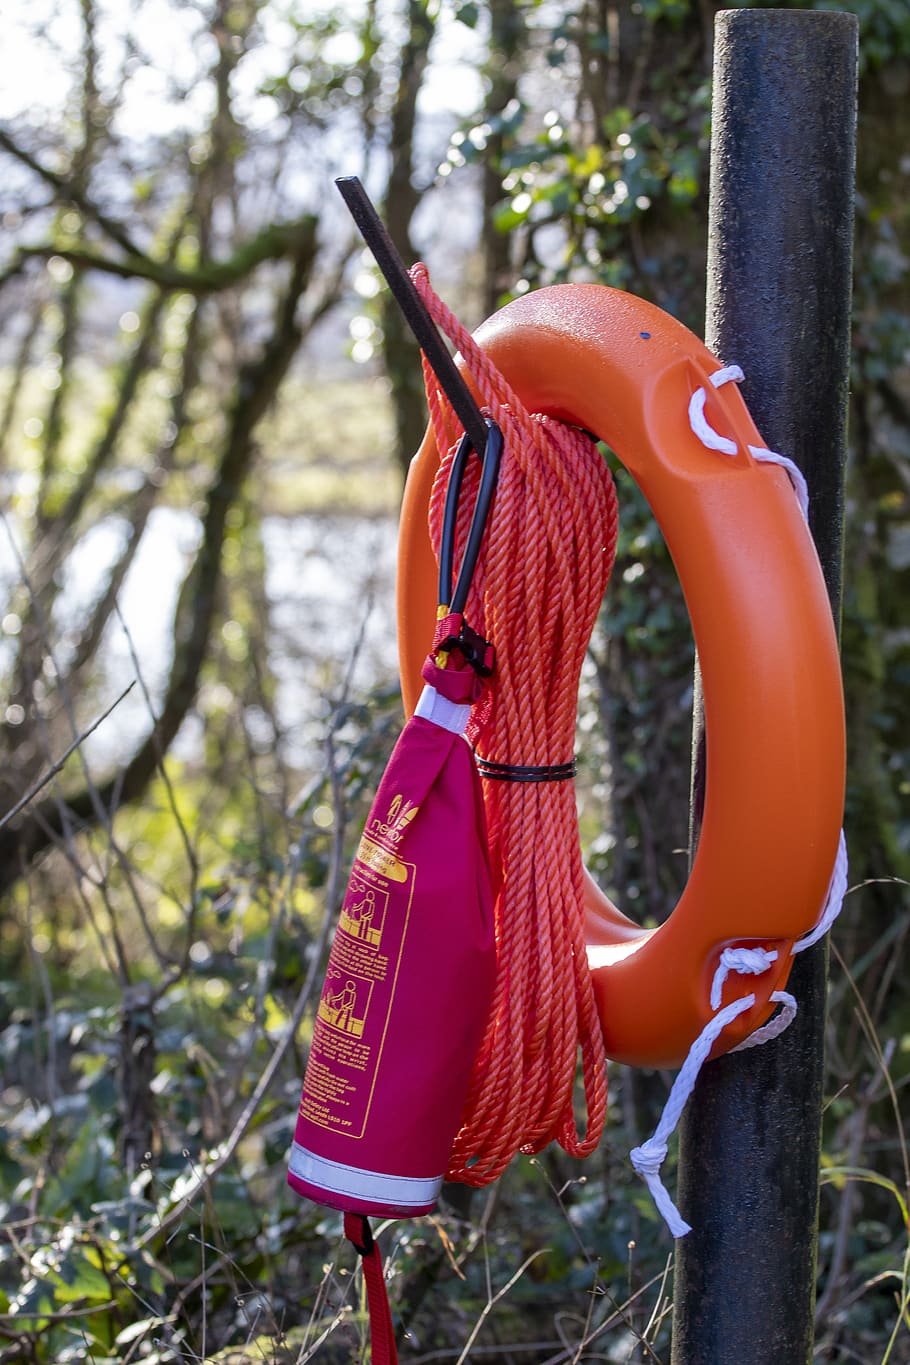 lifebuoy, ring, rope, emergency, safety, water, swim, hanging, tree, day